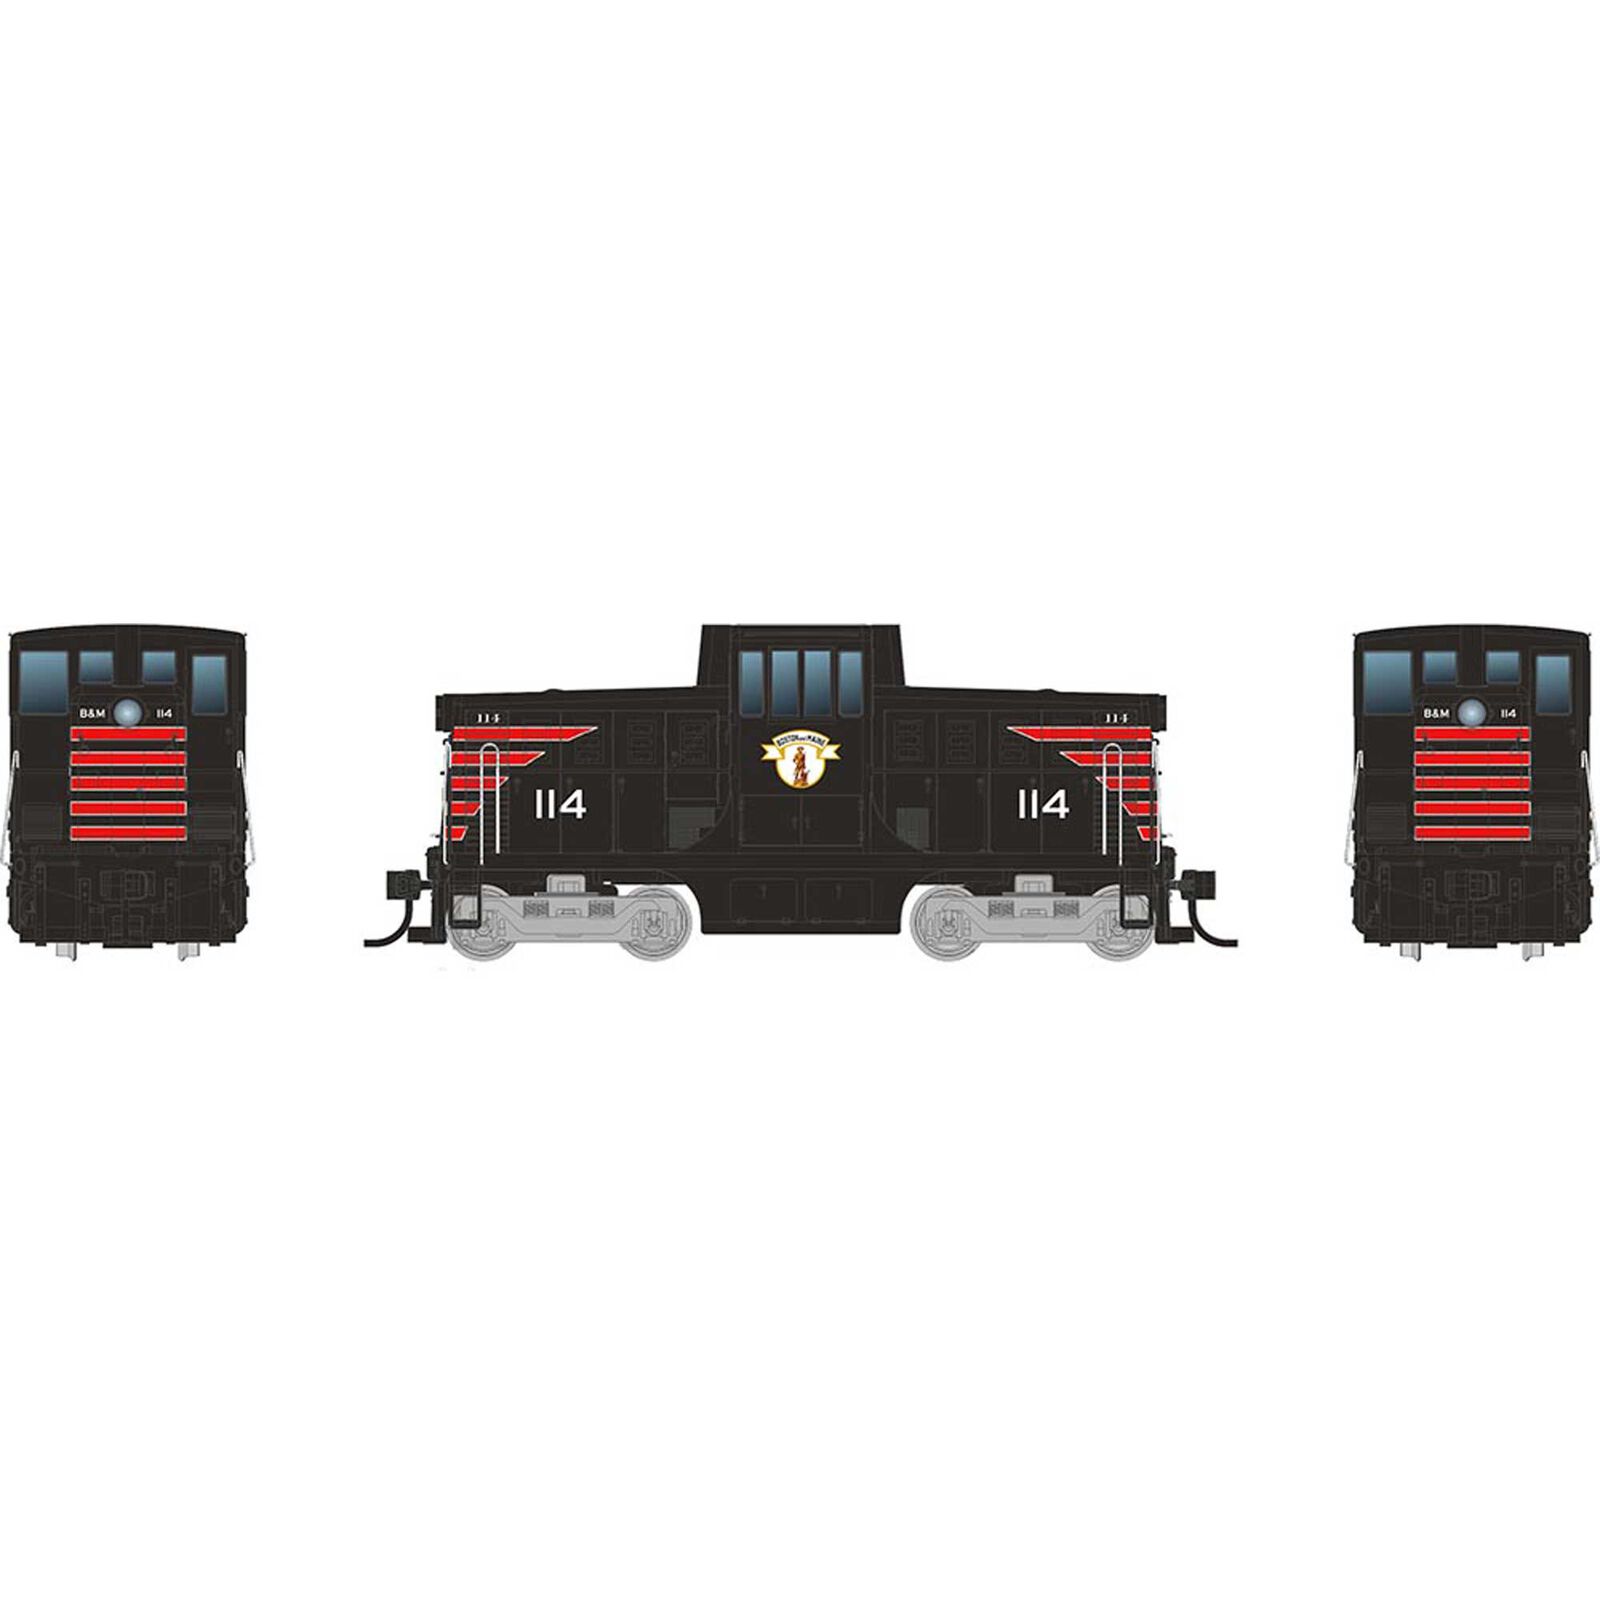 HO GE 44 Tonner Switcher Locomotive with DCC & Sound, B&M Minuteman #114